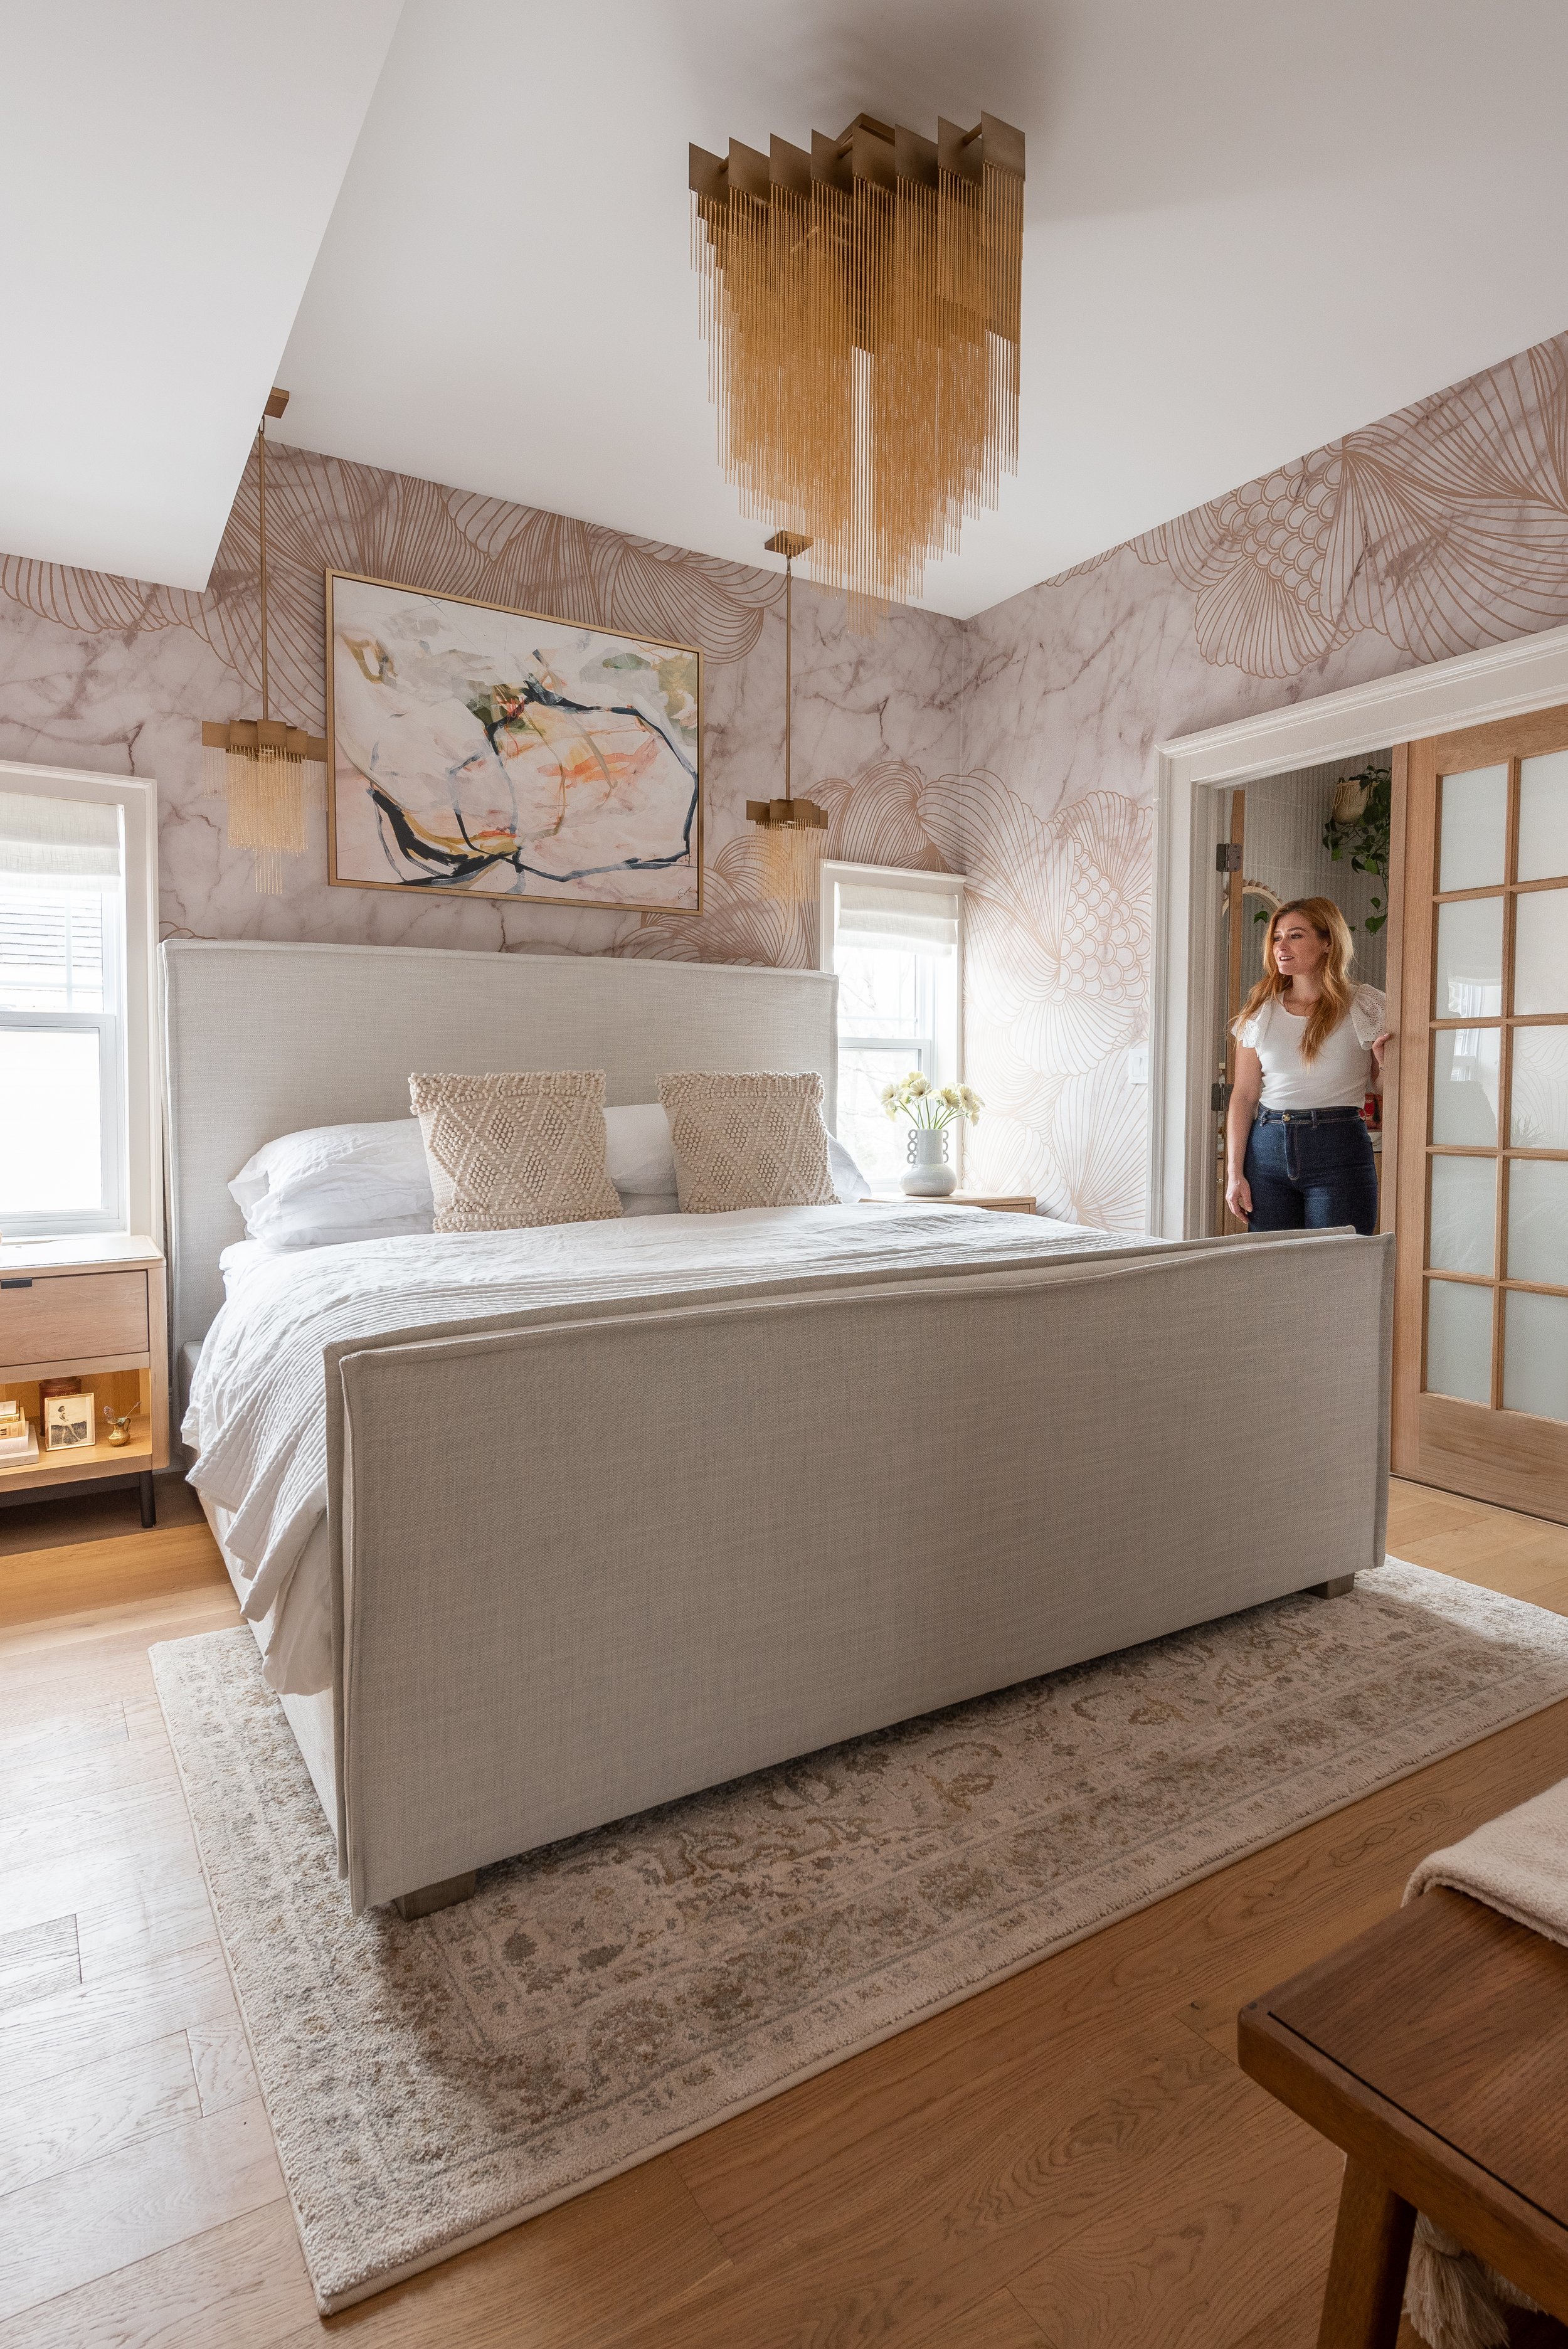 How to DIY Your Dream Vanity  Bedroom decor, Room decor, Home decor